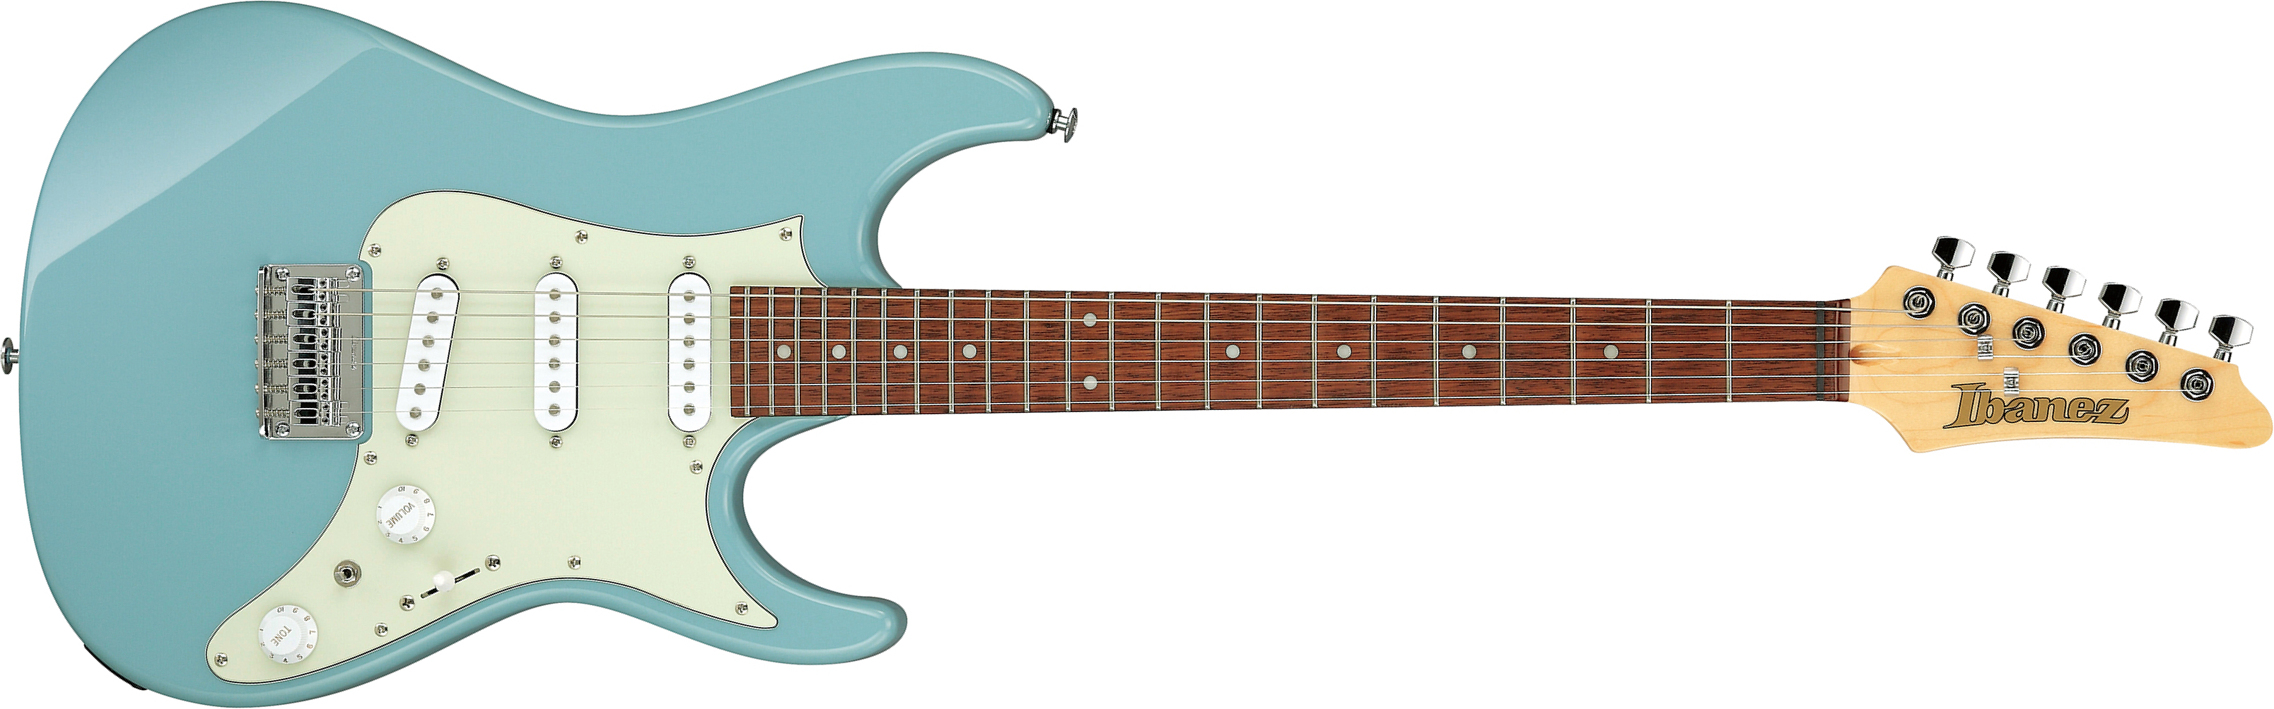 Ibanez Azes31 Prb Standard 3s Trem Jat - Purist Blue - E-Gitarre in Str-Form - Main picture